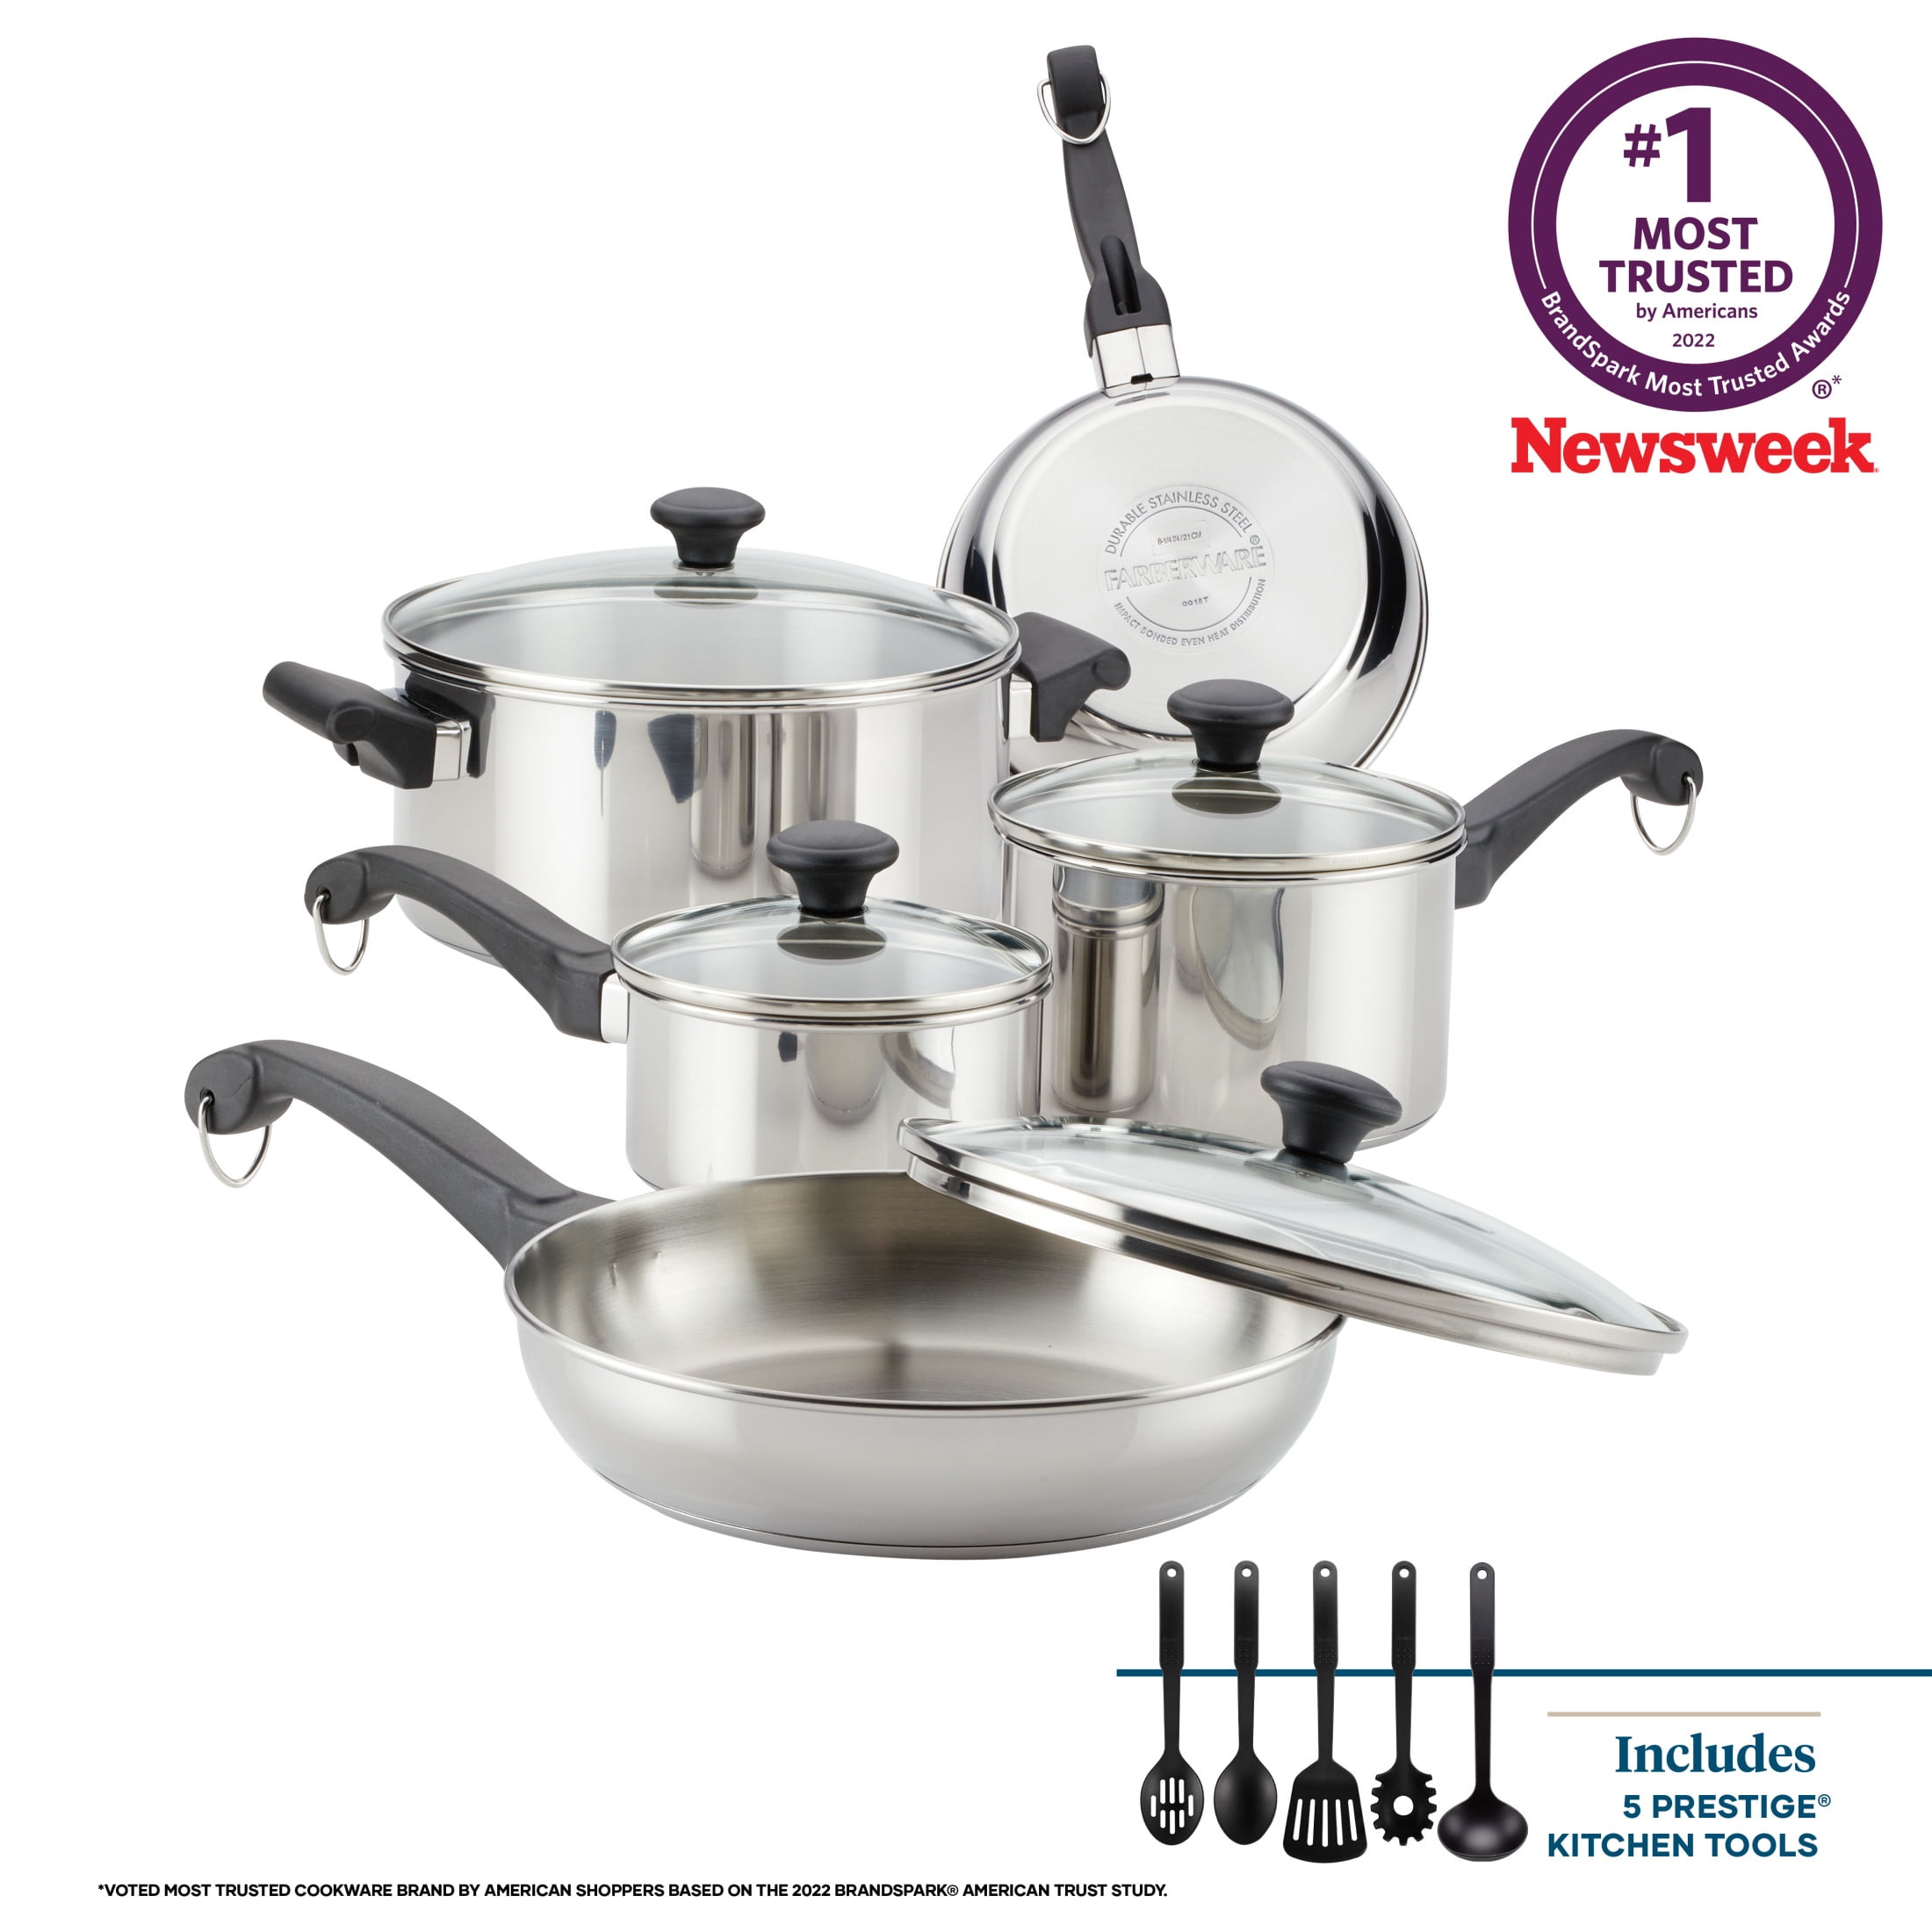 Farberware Millennium Stainless Steel Cookware Pots and Pans Set, 10 Piece,  Silver & Reviews